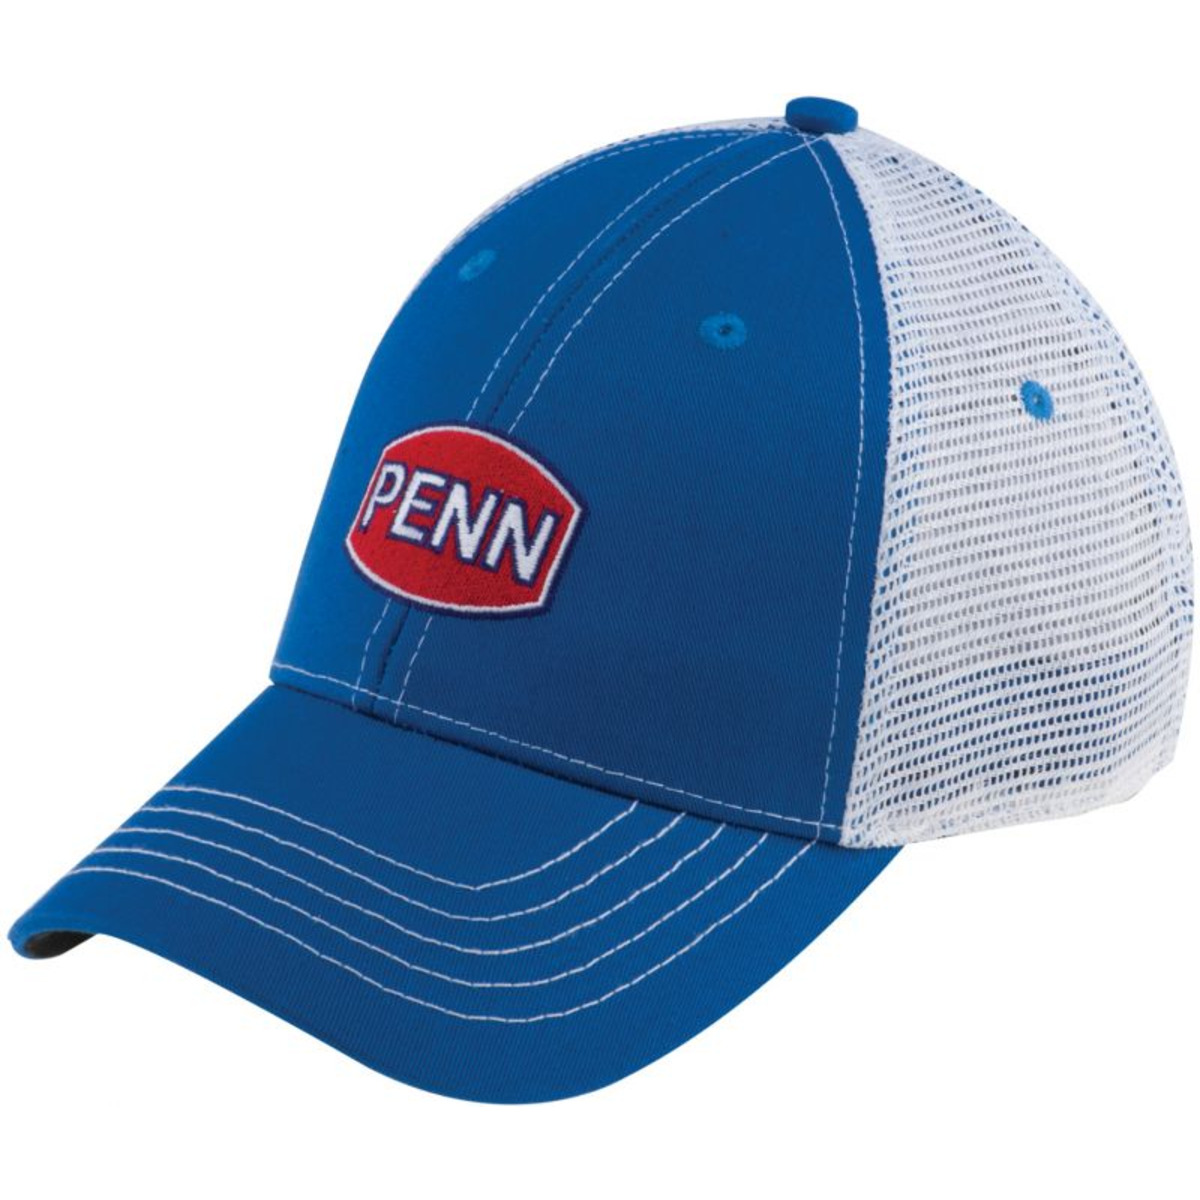 Penn Hat - Blue